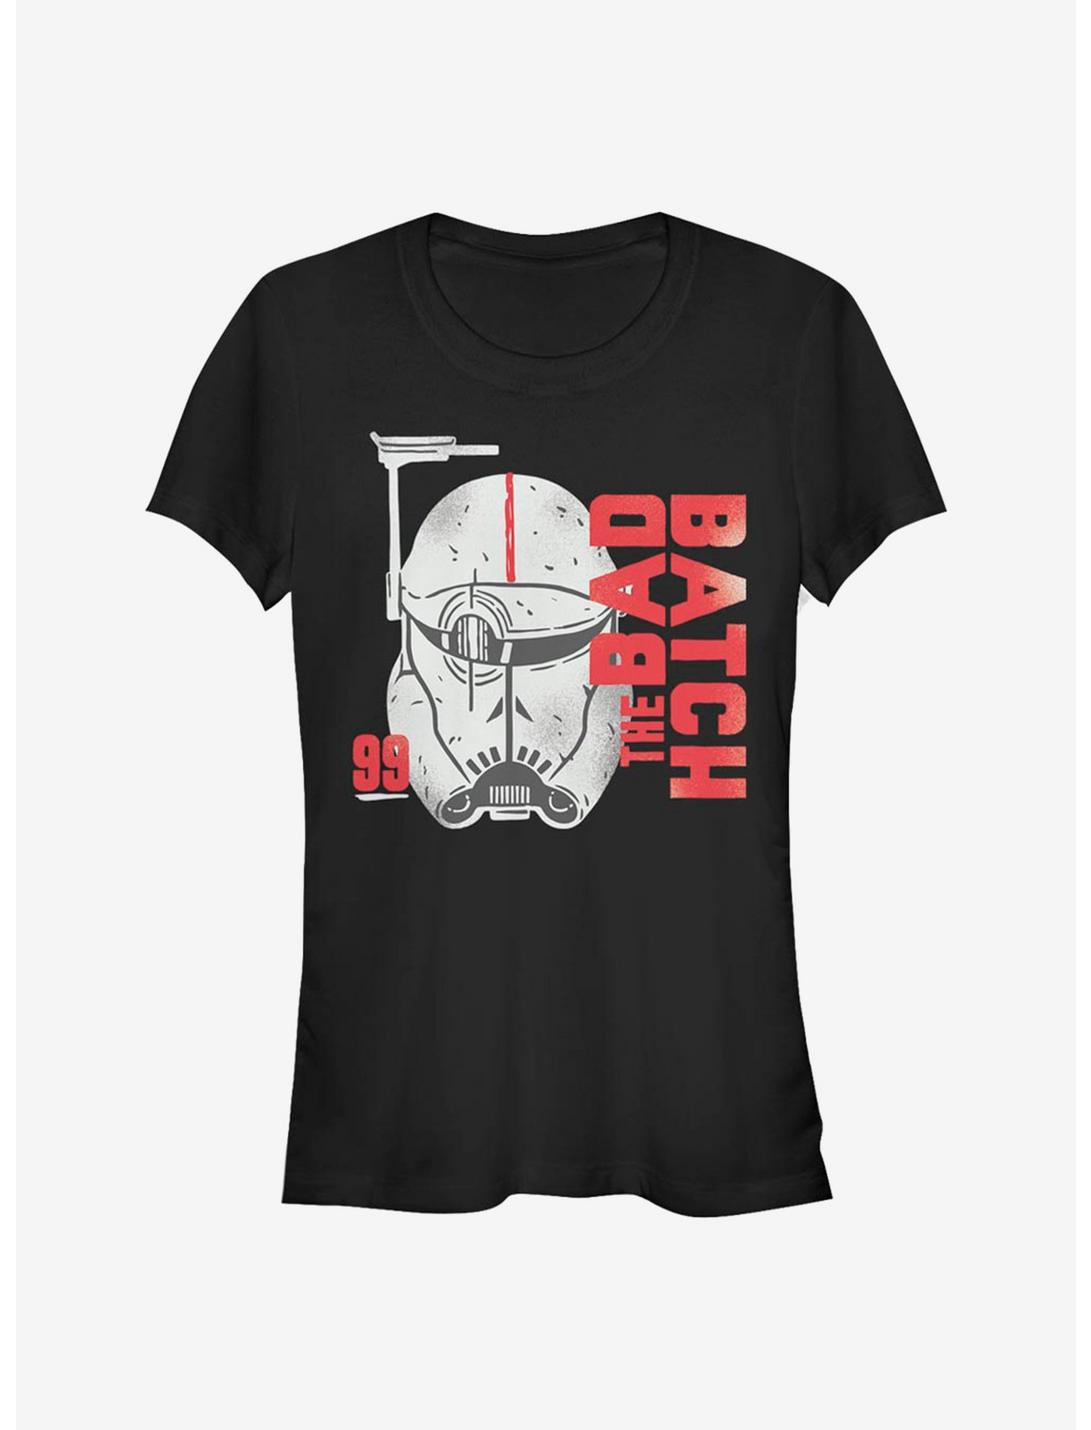 Star Wars: The Bad Batch Unit 99 T-Shirt, BLACK, hi-res